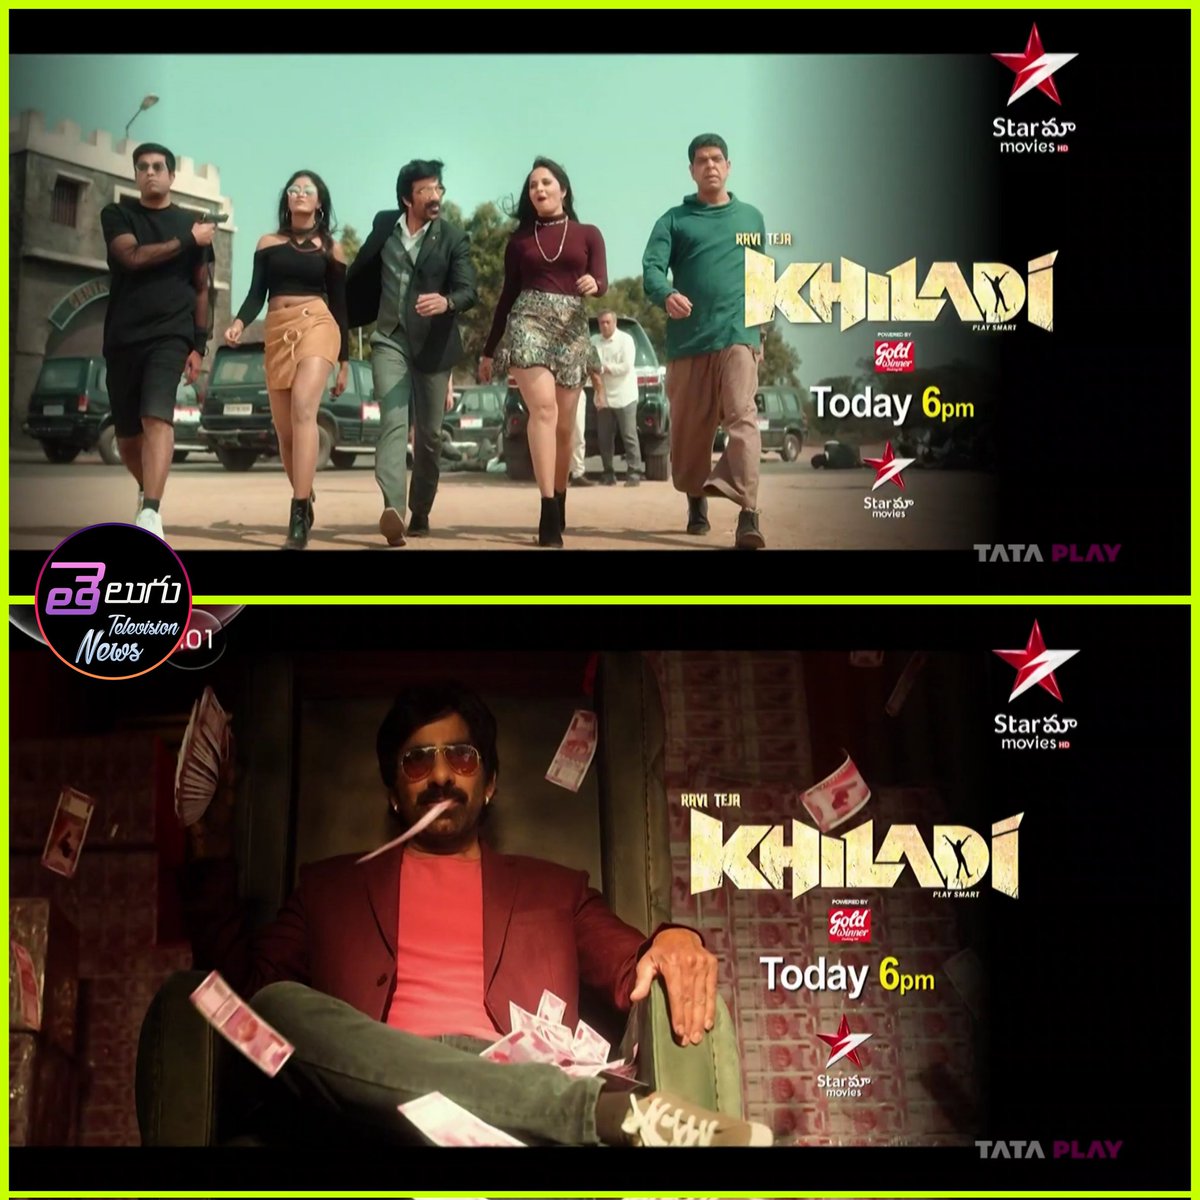 Movie Of The Month 
#Khiladi
Today at 6pm on #StarMaaMovies 

#Raviteja #dimplehayati #MeenakshiChaudary #Arjun #anasuya